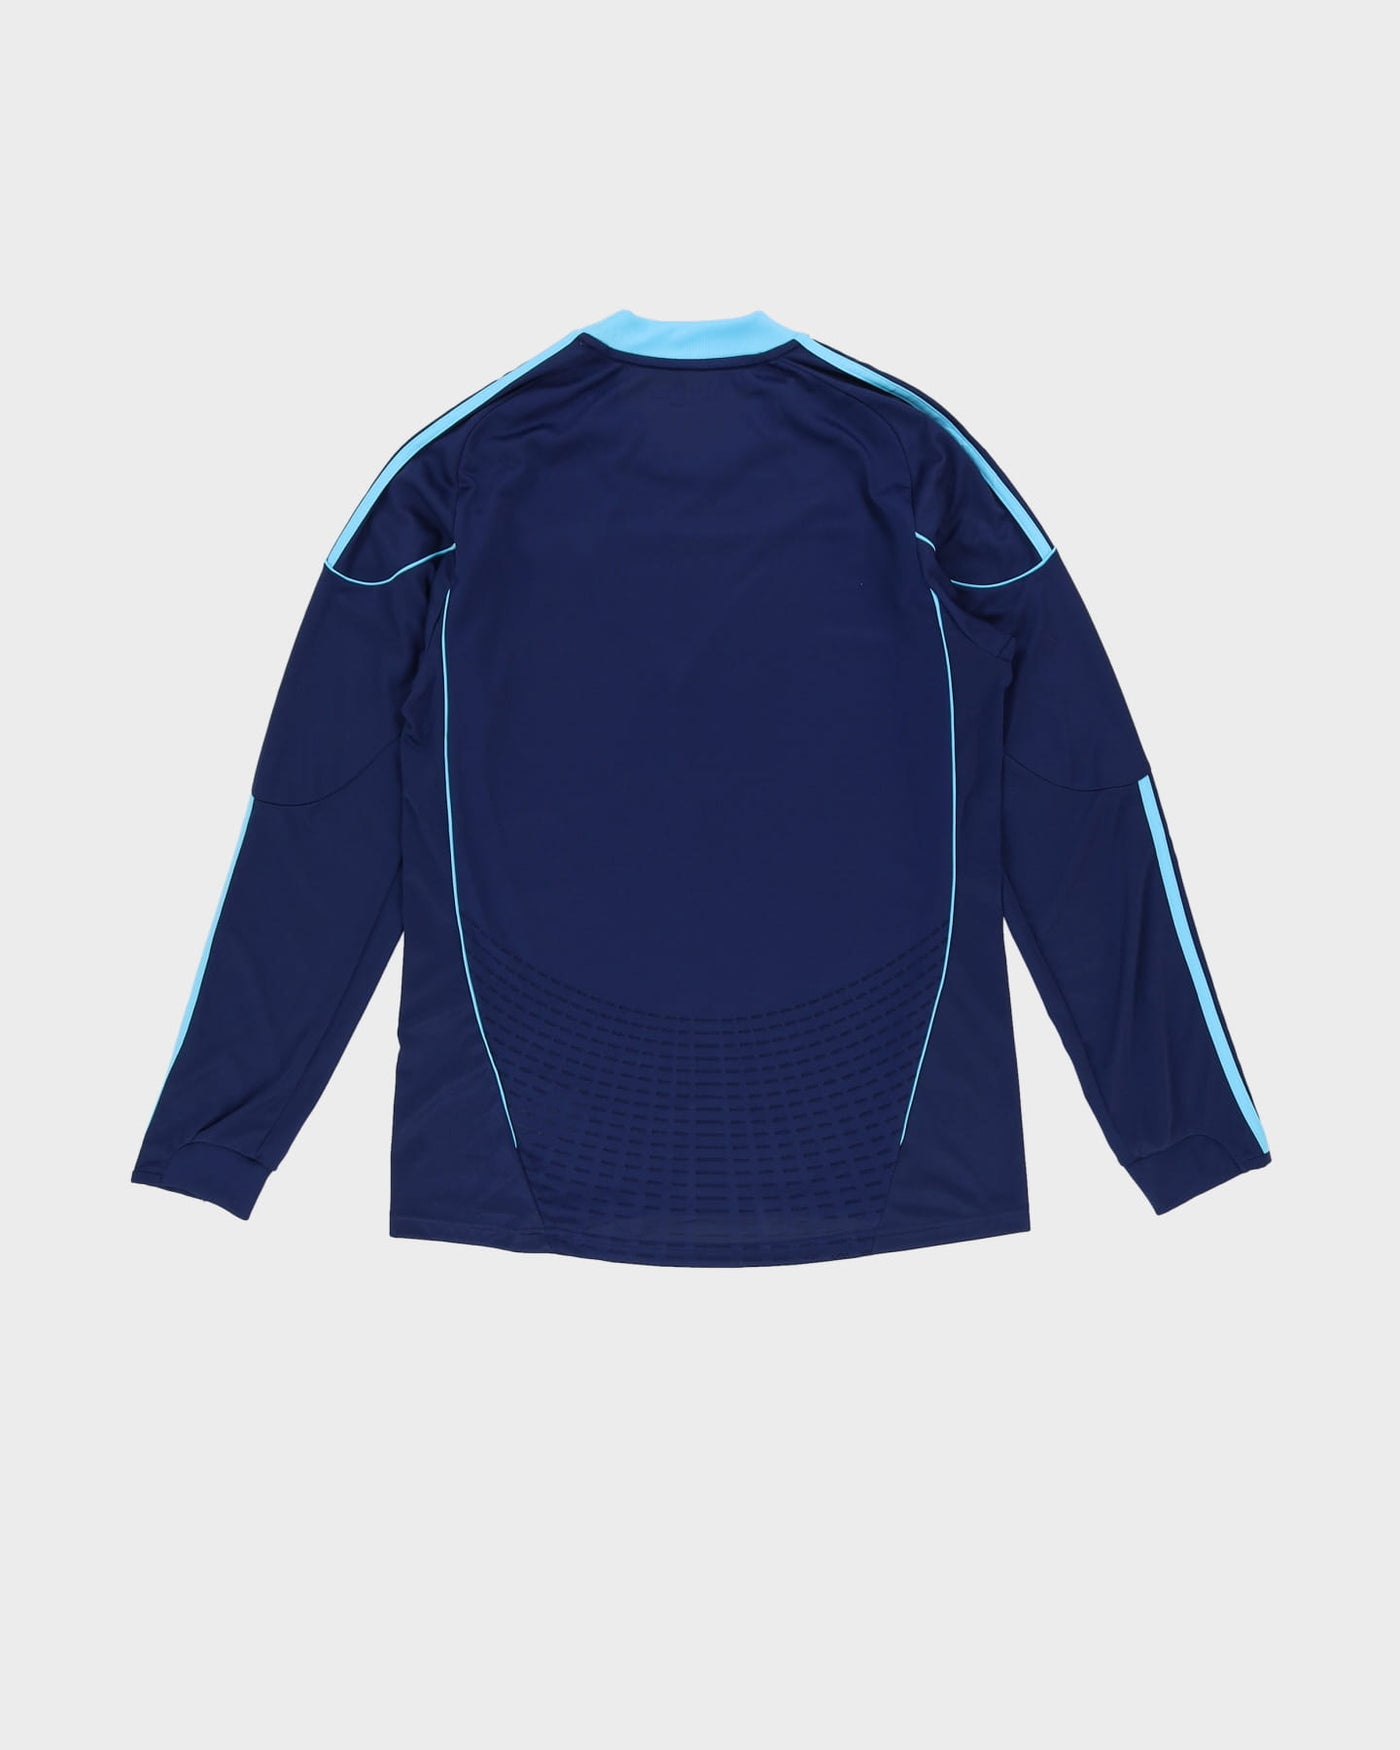 2010 Stoke City Navy Adidas Long-Sleeve Football Shirt / Jersey - L